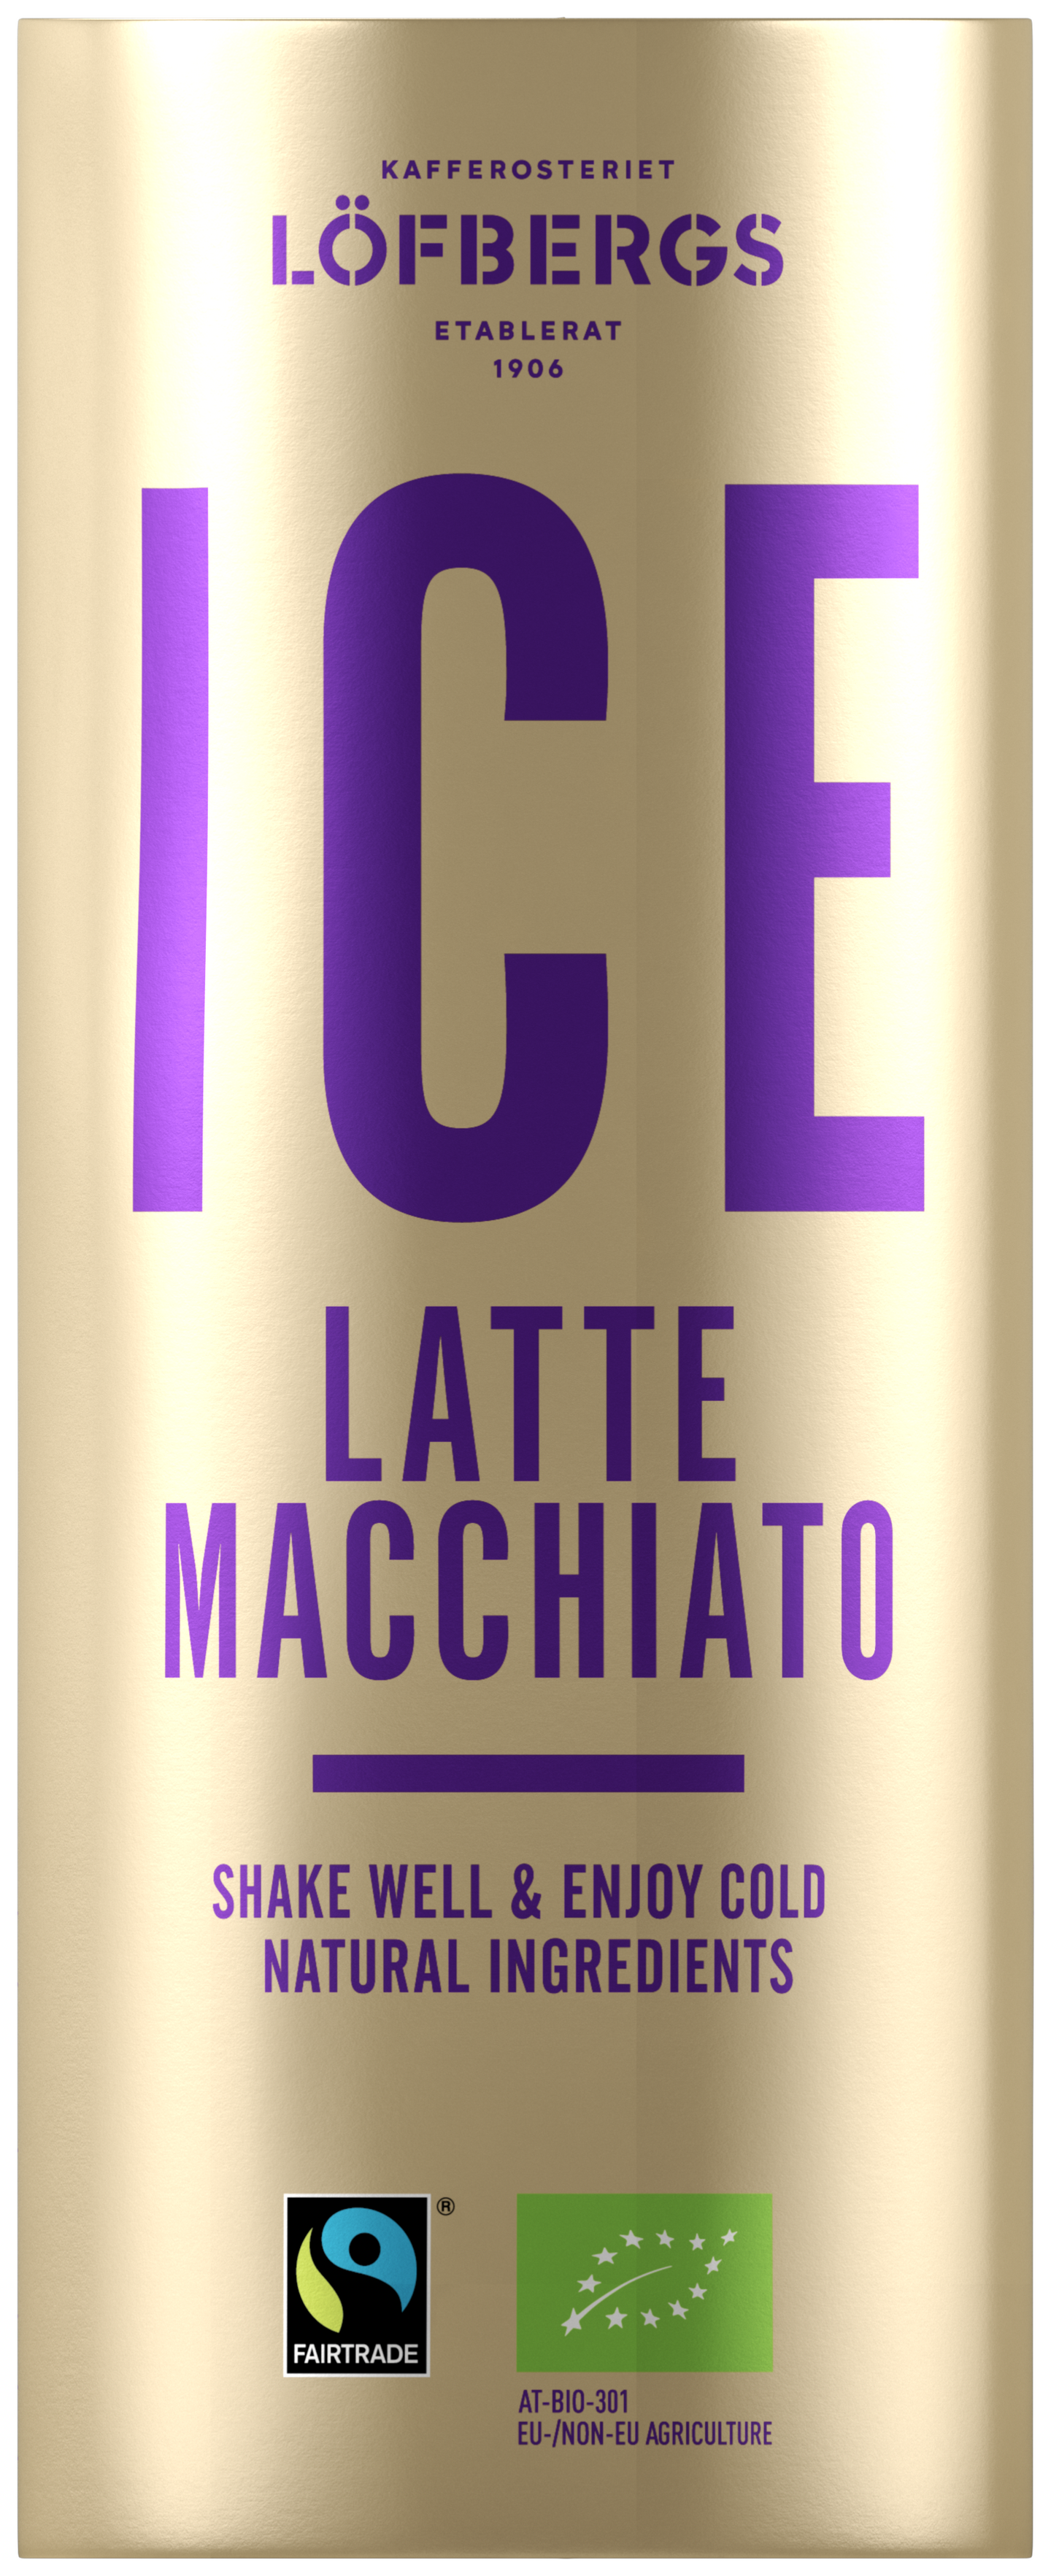 Löfbergs ICE Latte Macchiato jääkahvi 230 ml Reilu kauppa, luomu